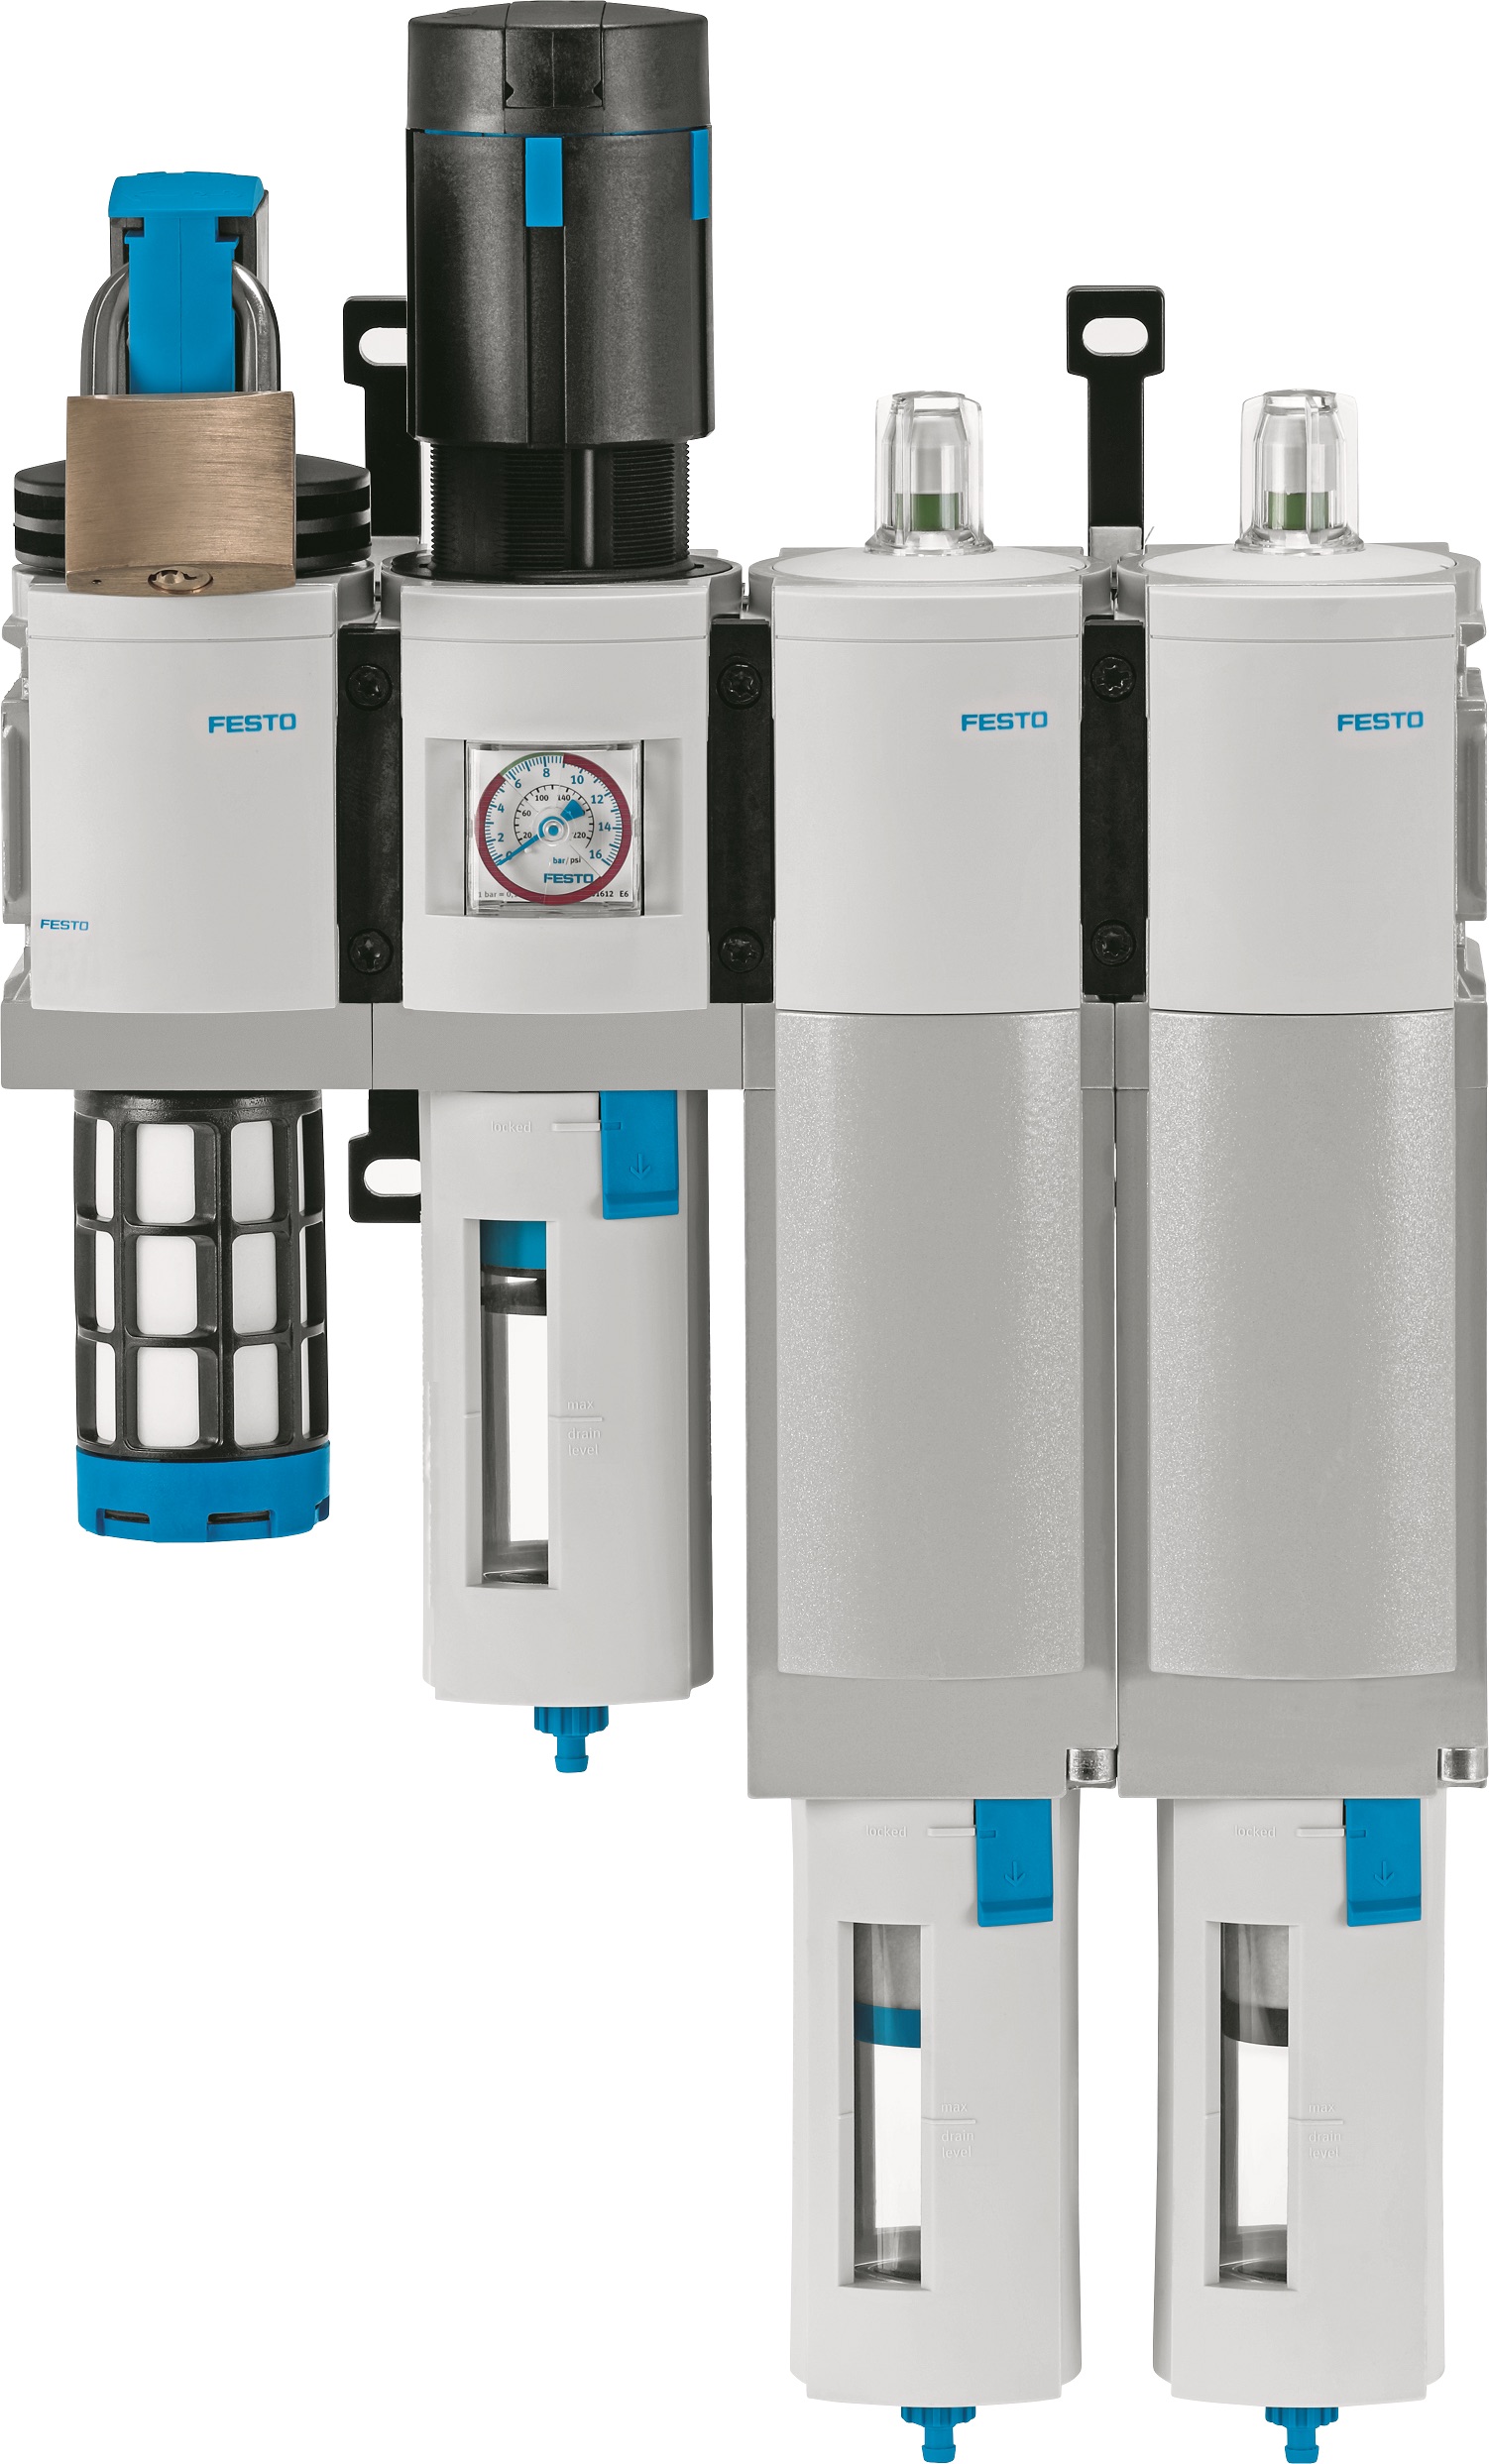 filtration units